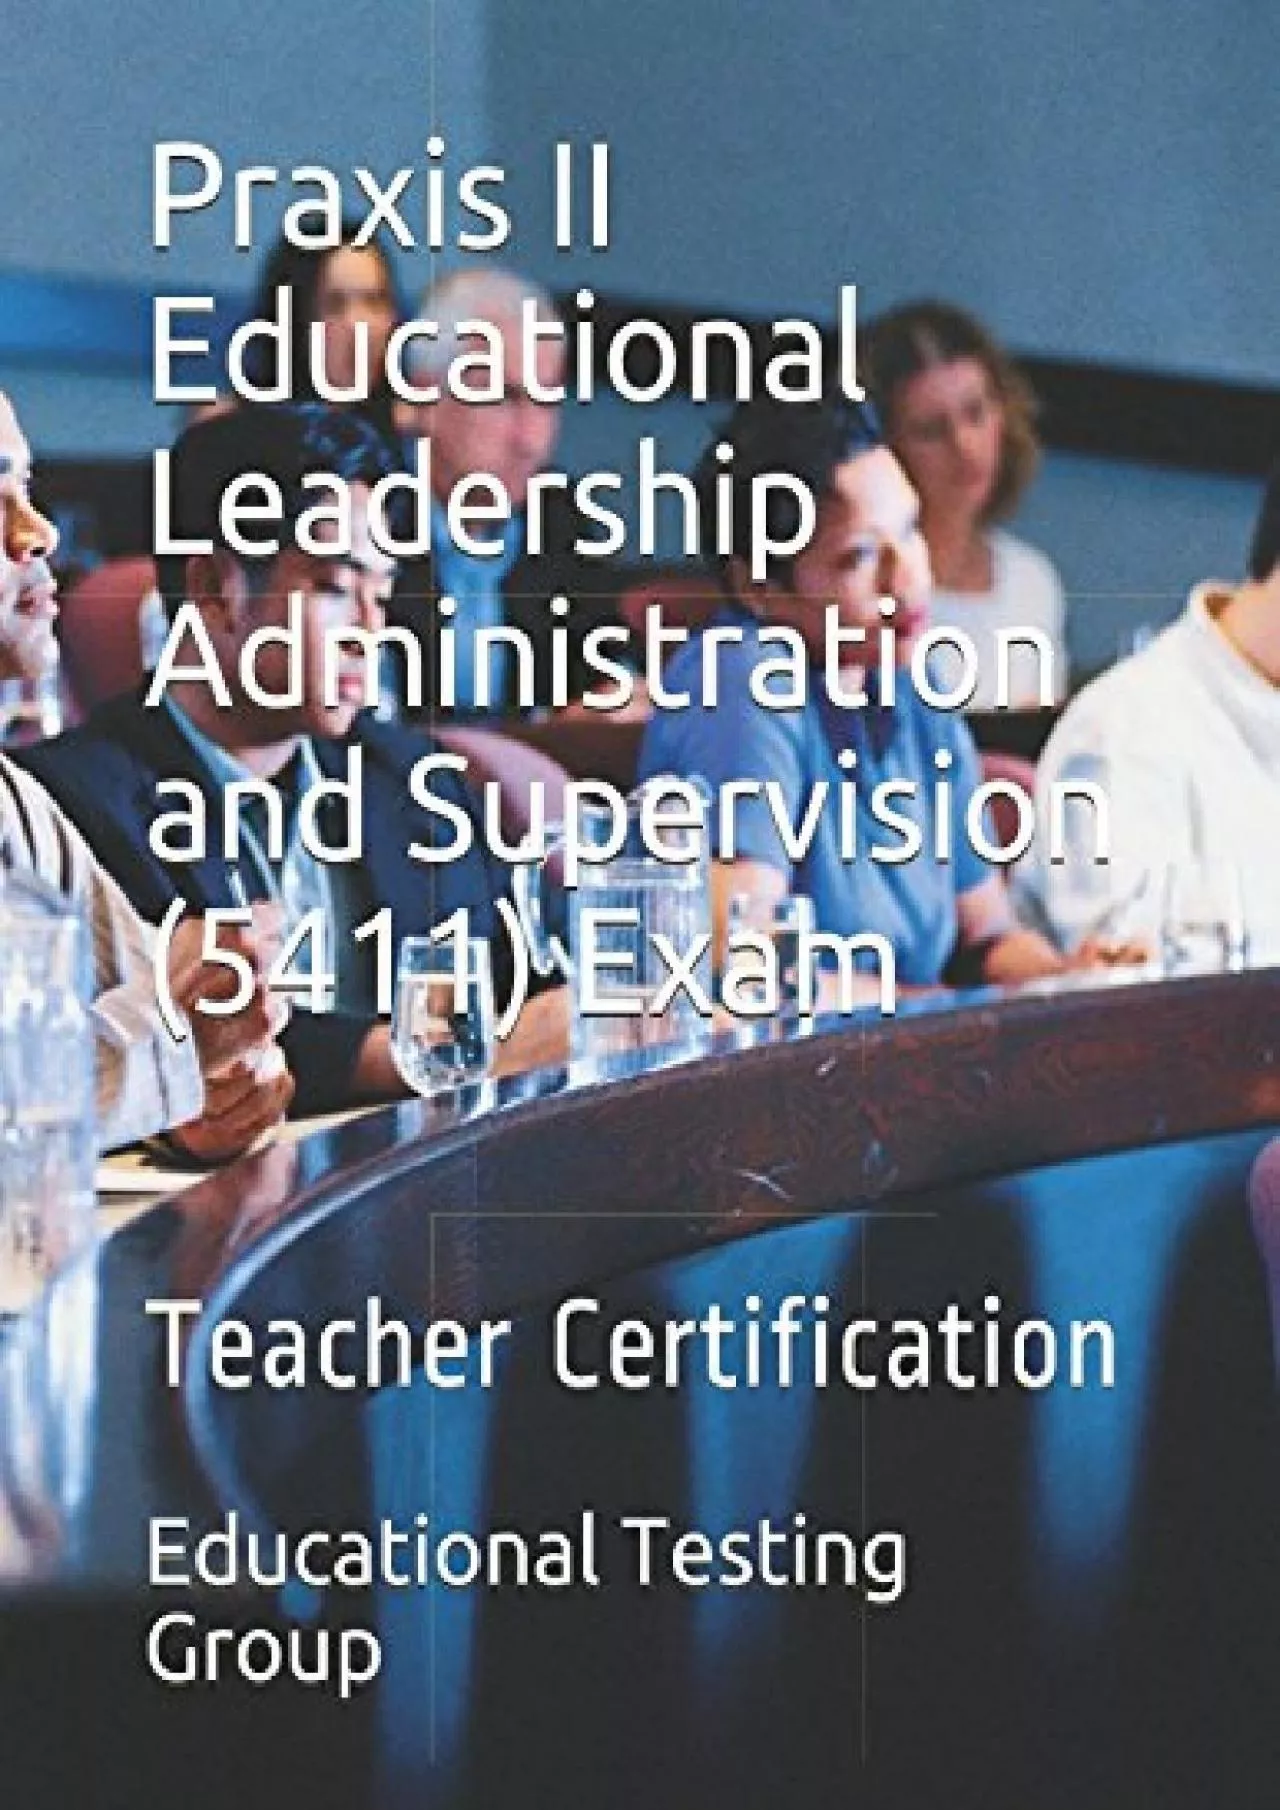 [EBOOK] Praxis II Educational Leadership Administration and Supervision 5411 Exam: Teacher